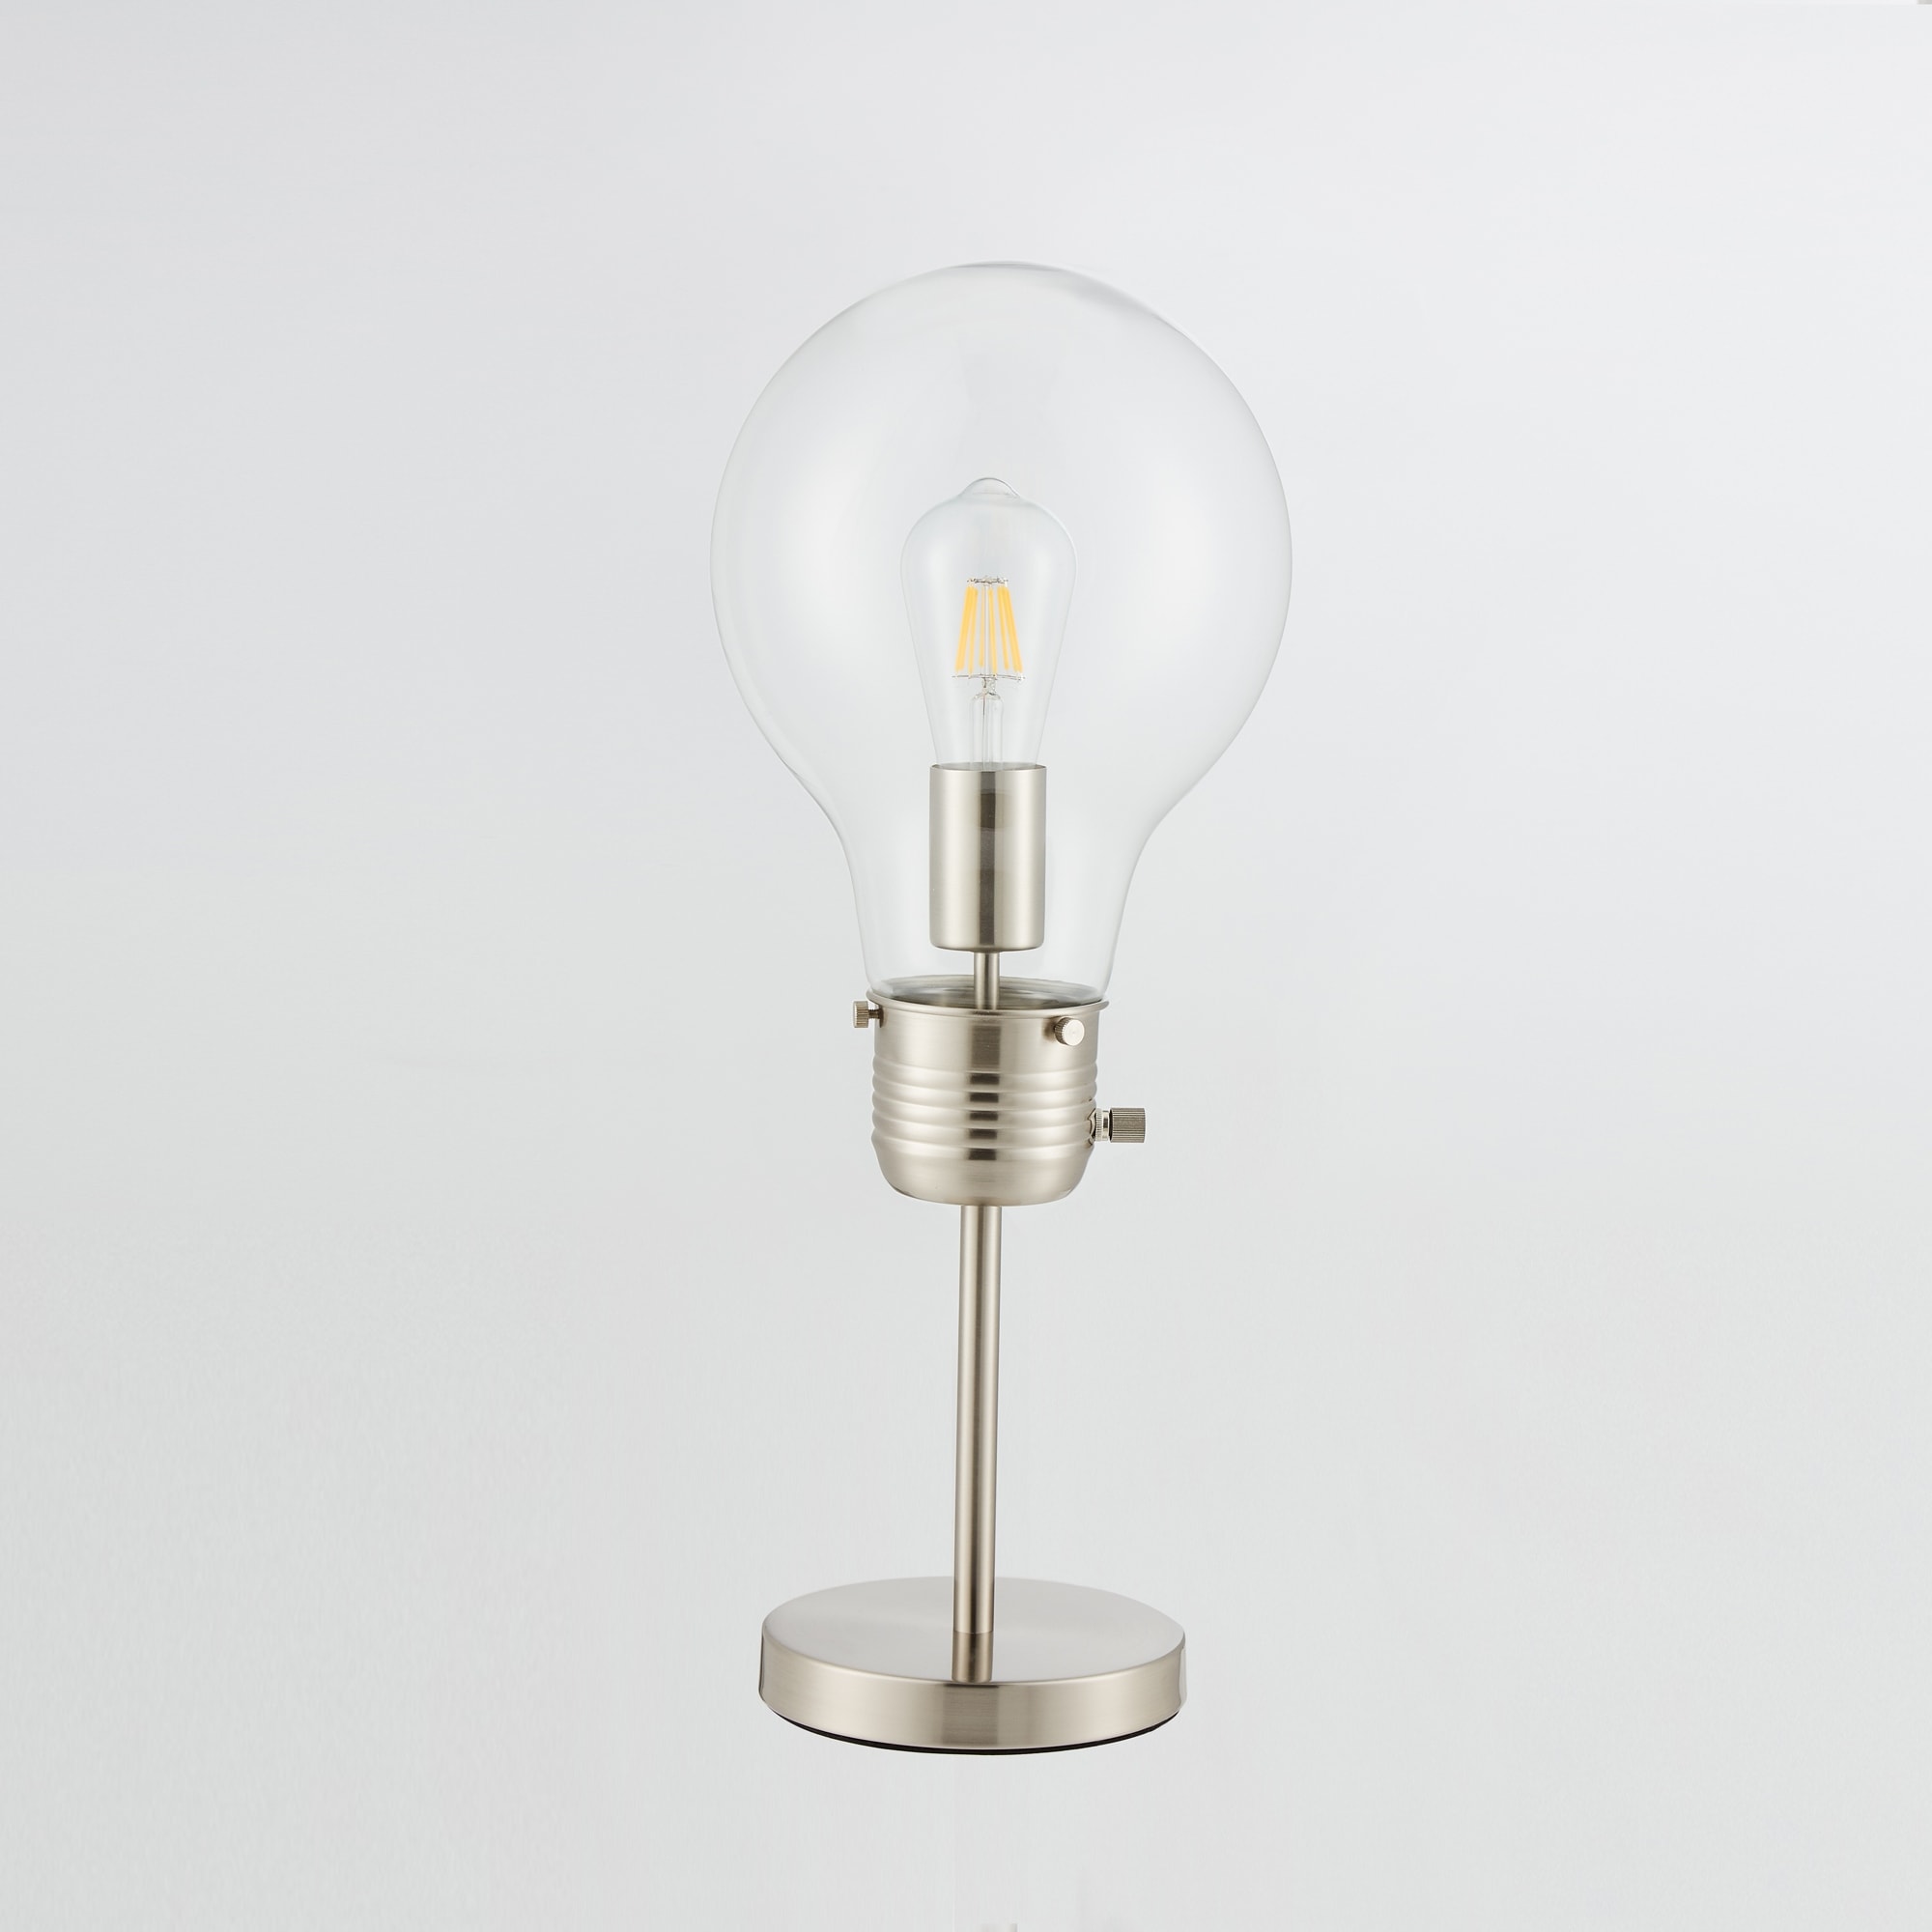 CO-Z 17" Bulb-in-a-Bulb Table Lamp Desk Lamp-Brushed Nickel/Dark Nickel Brushed Nickel Nickel - image 5 of 5